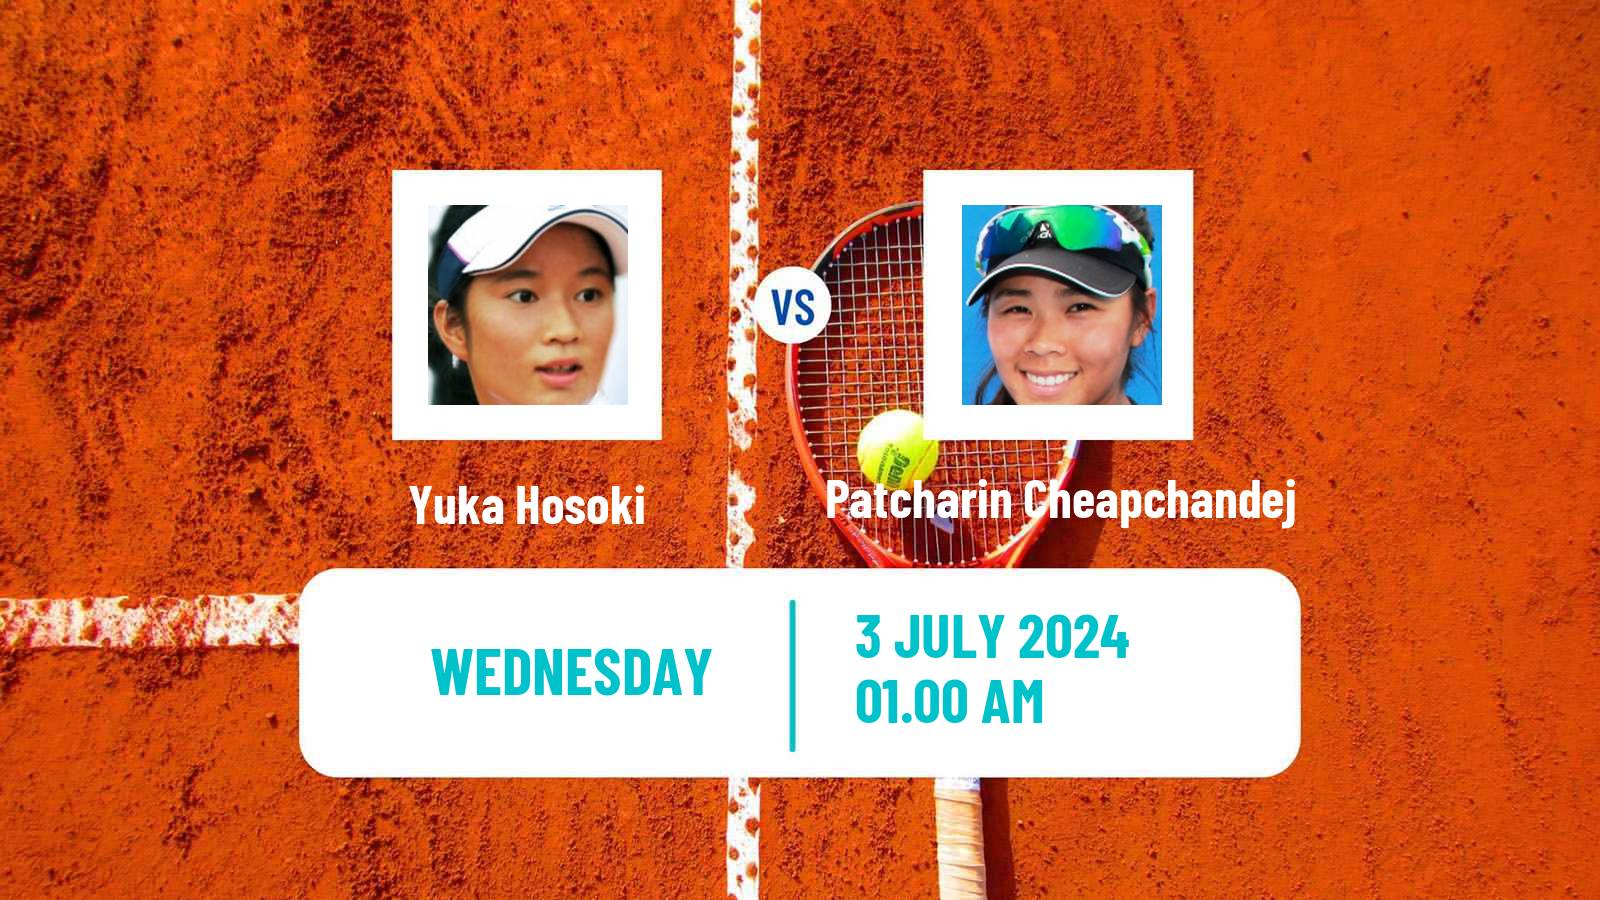 Tennis ITF W35 Nakhon Si Thammarat 2 Women Yuka Hosoki - Patcharin Cheapchandej